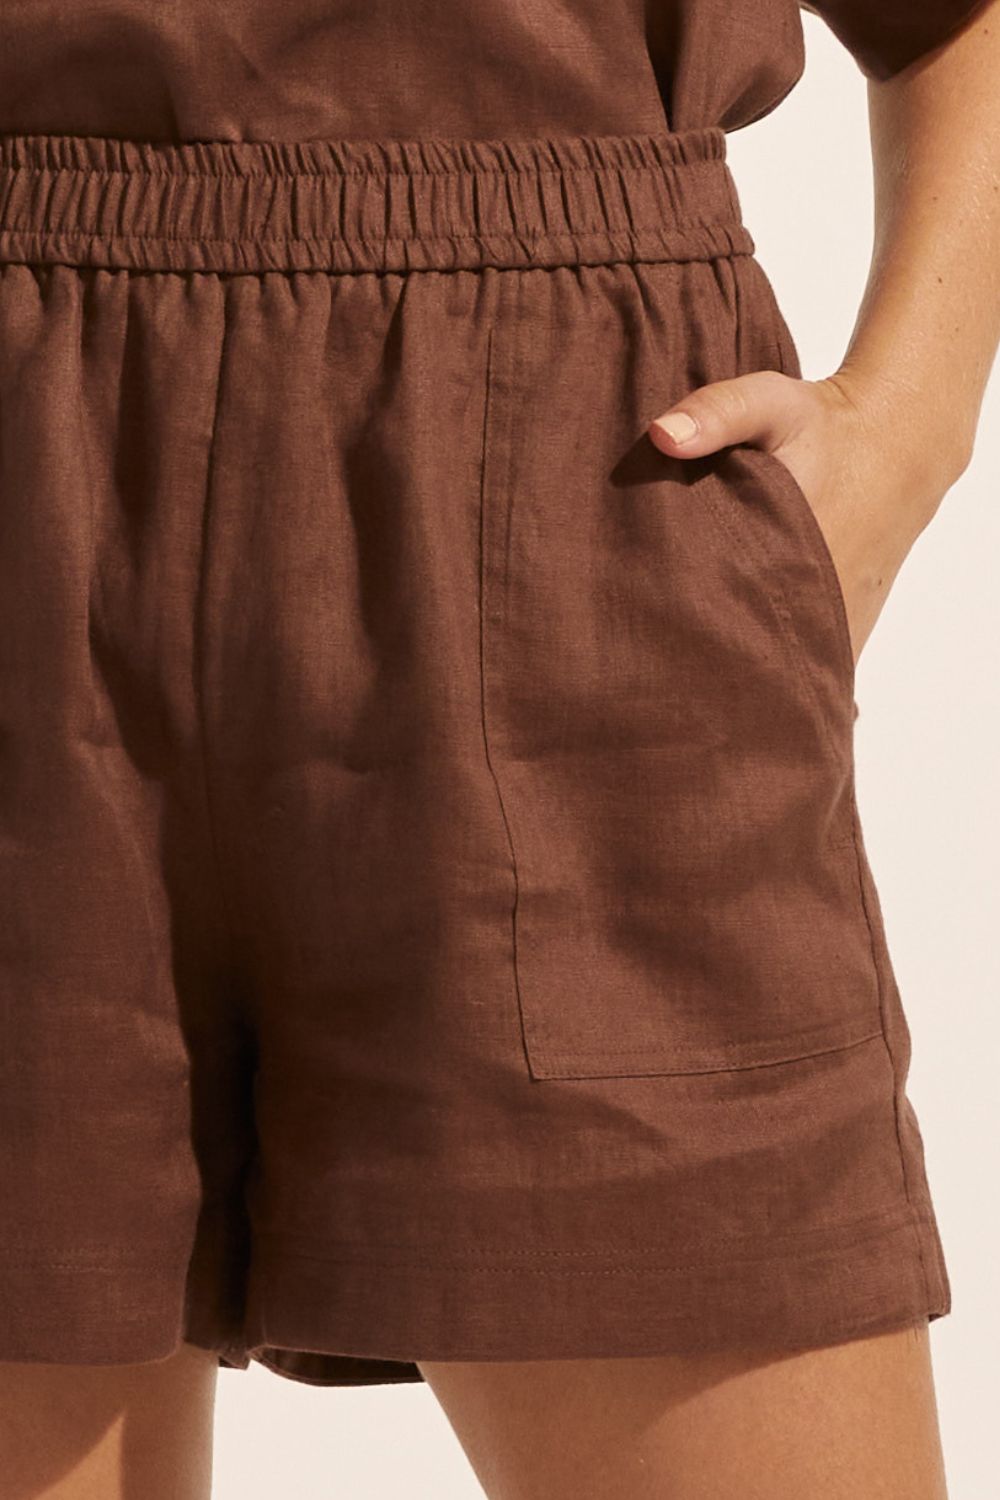 brown, shorts, elasticated waist, side pockets, close up image